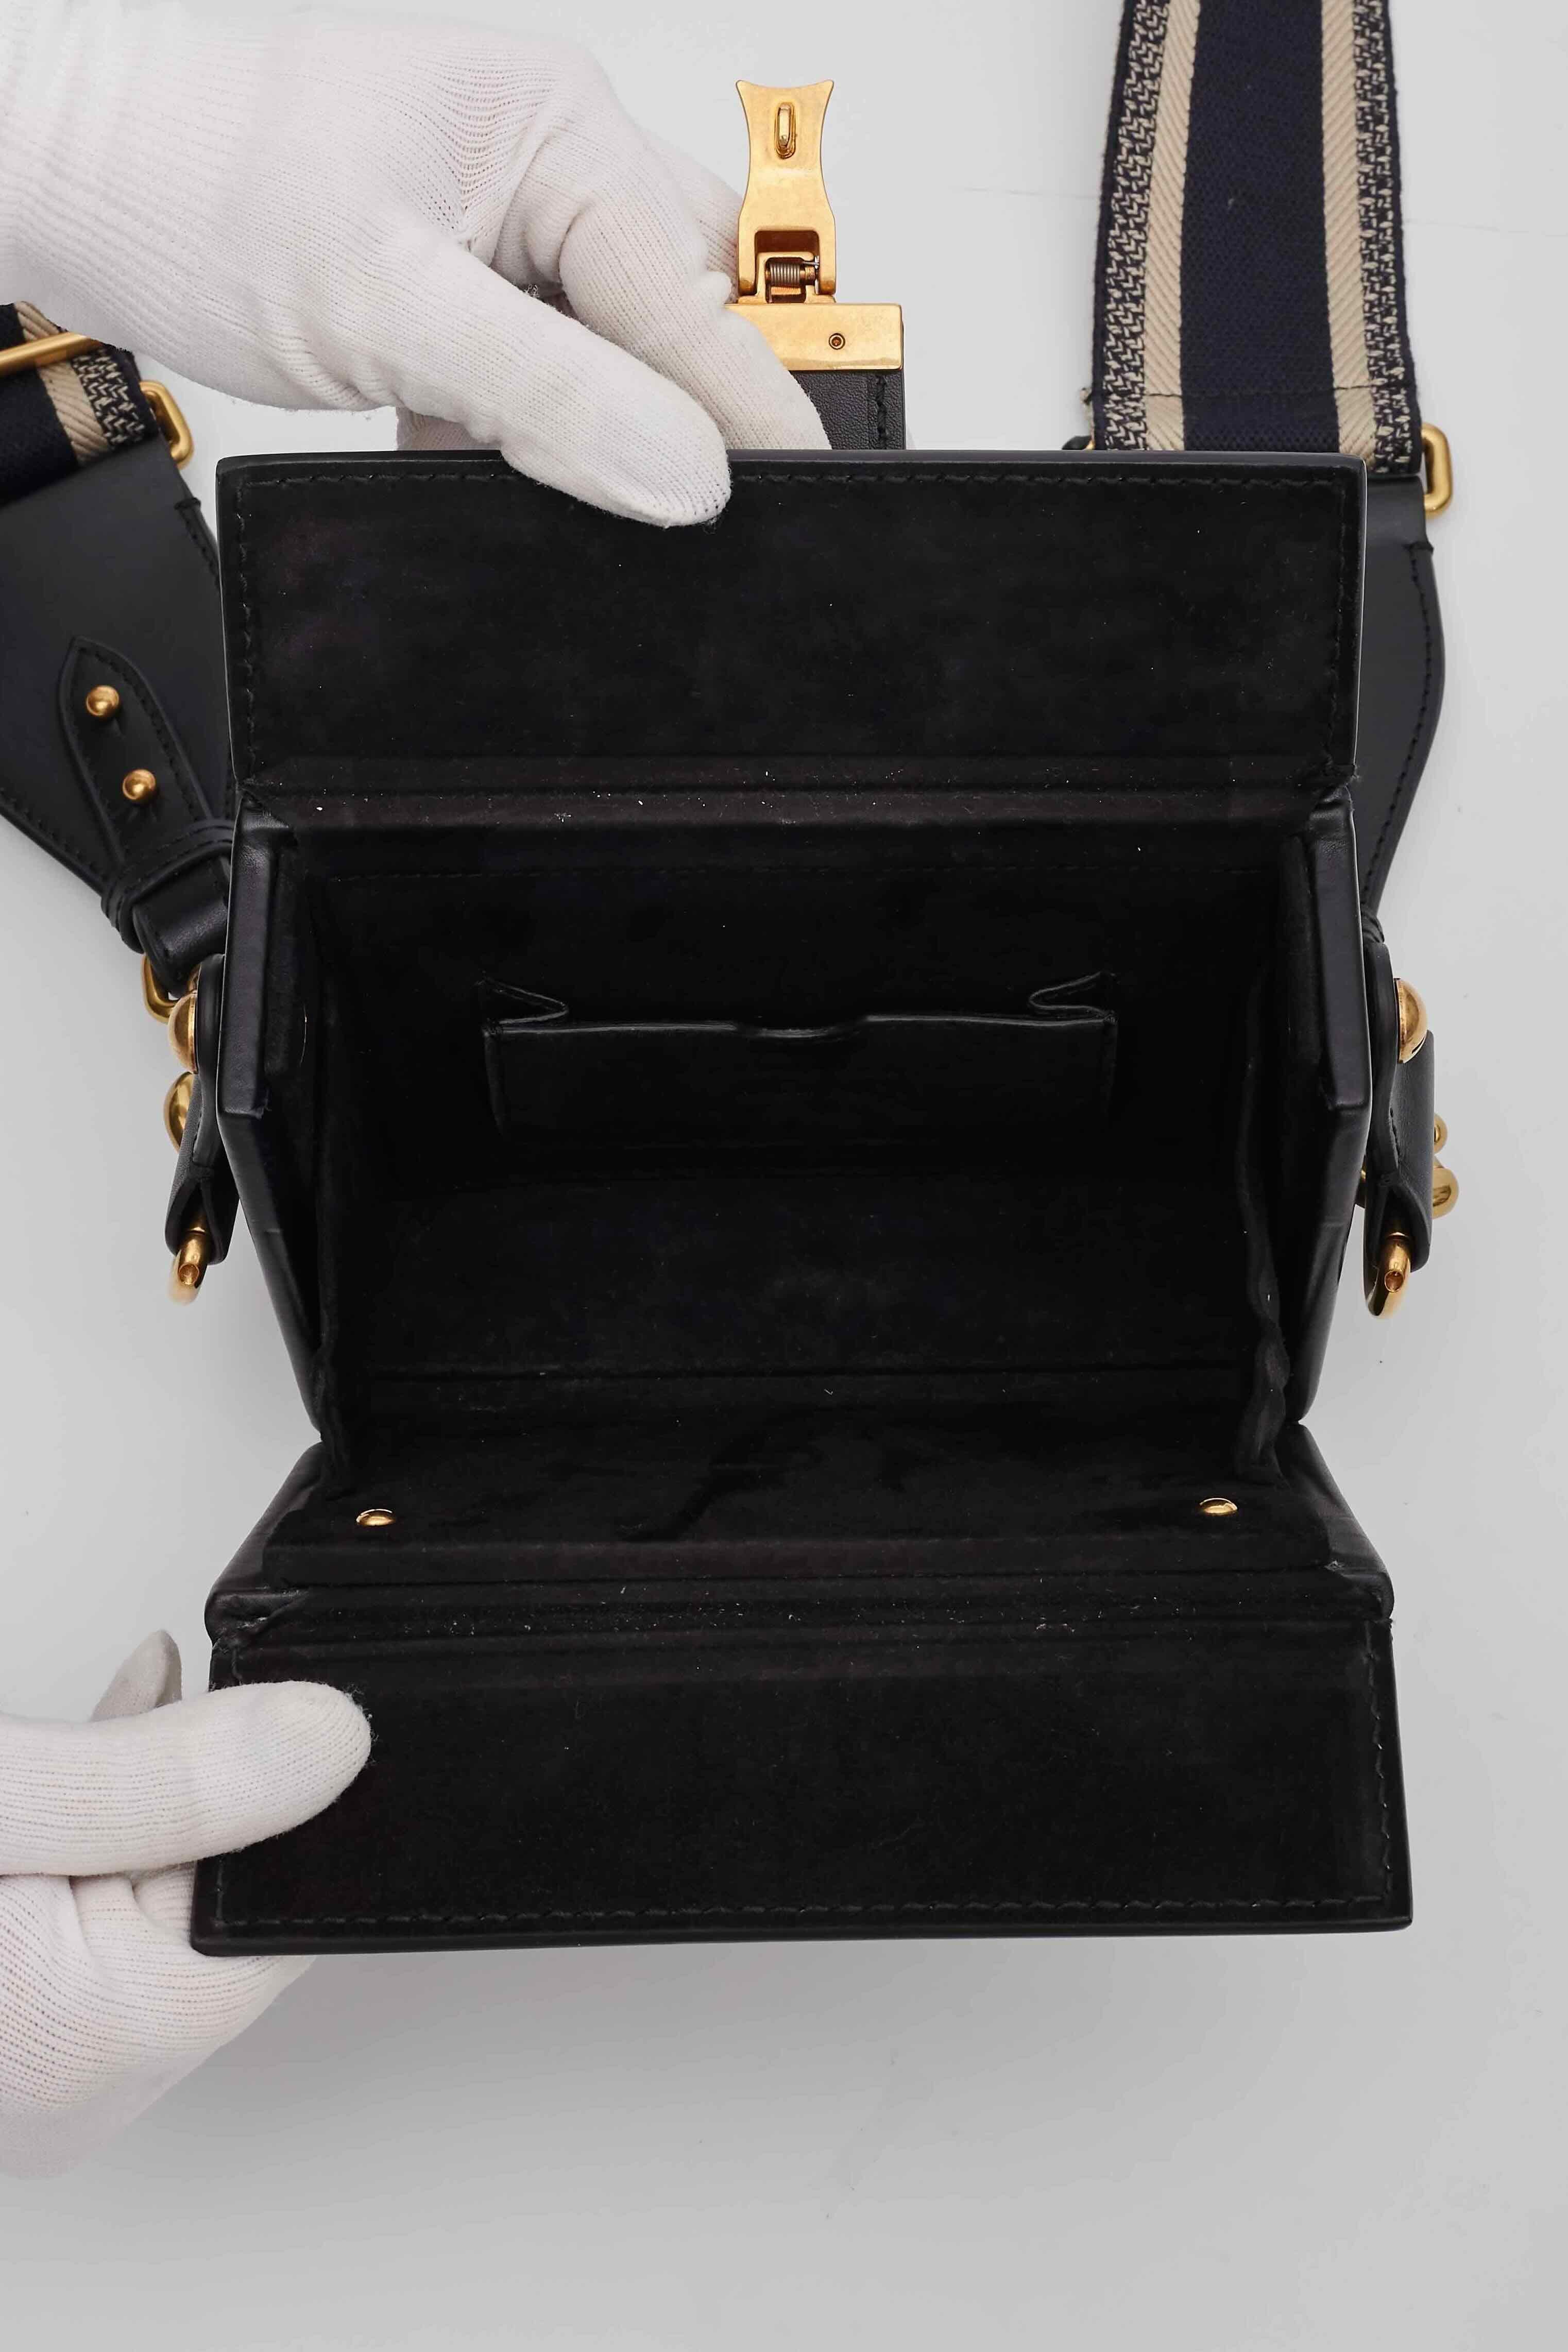 Dior Calf Leather Dior Addict Lockbox Shoulder Bag For Sale 4